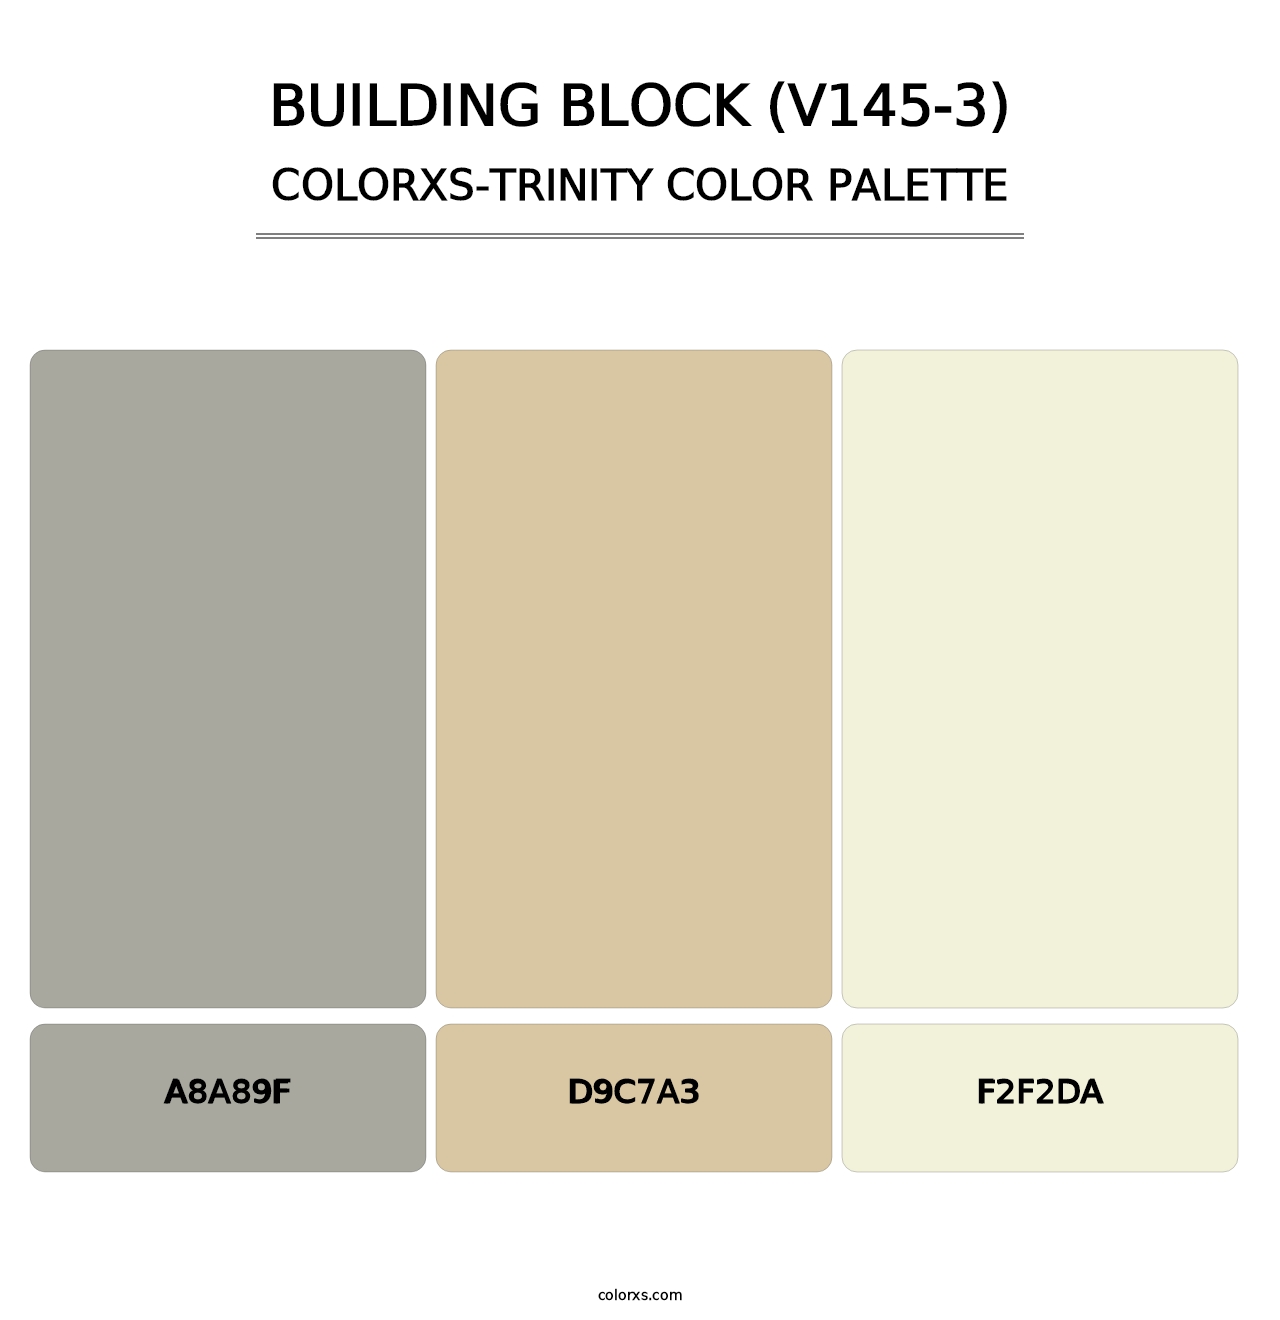 Building Block (V145-3) - Colorxs Trinity Palette